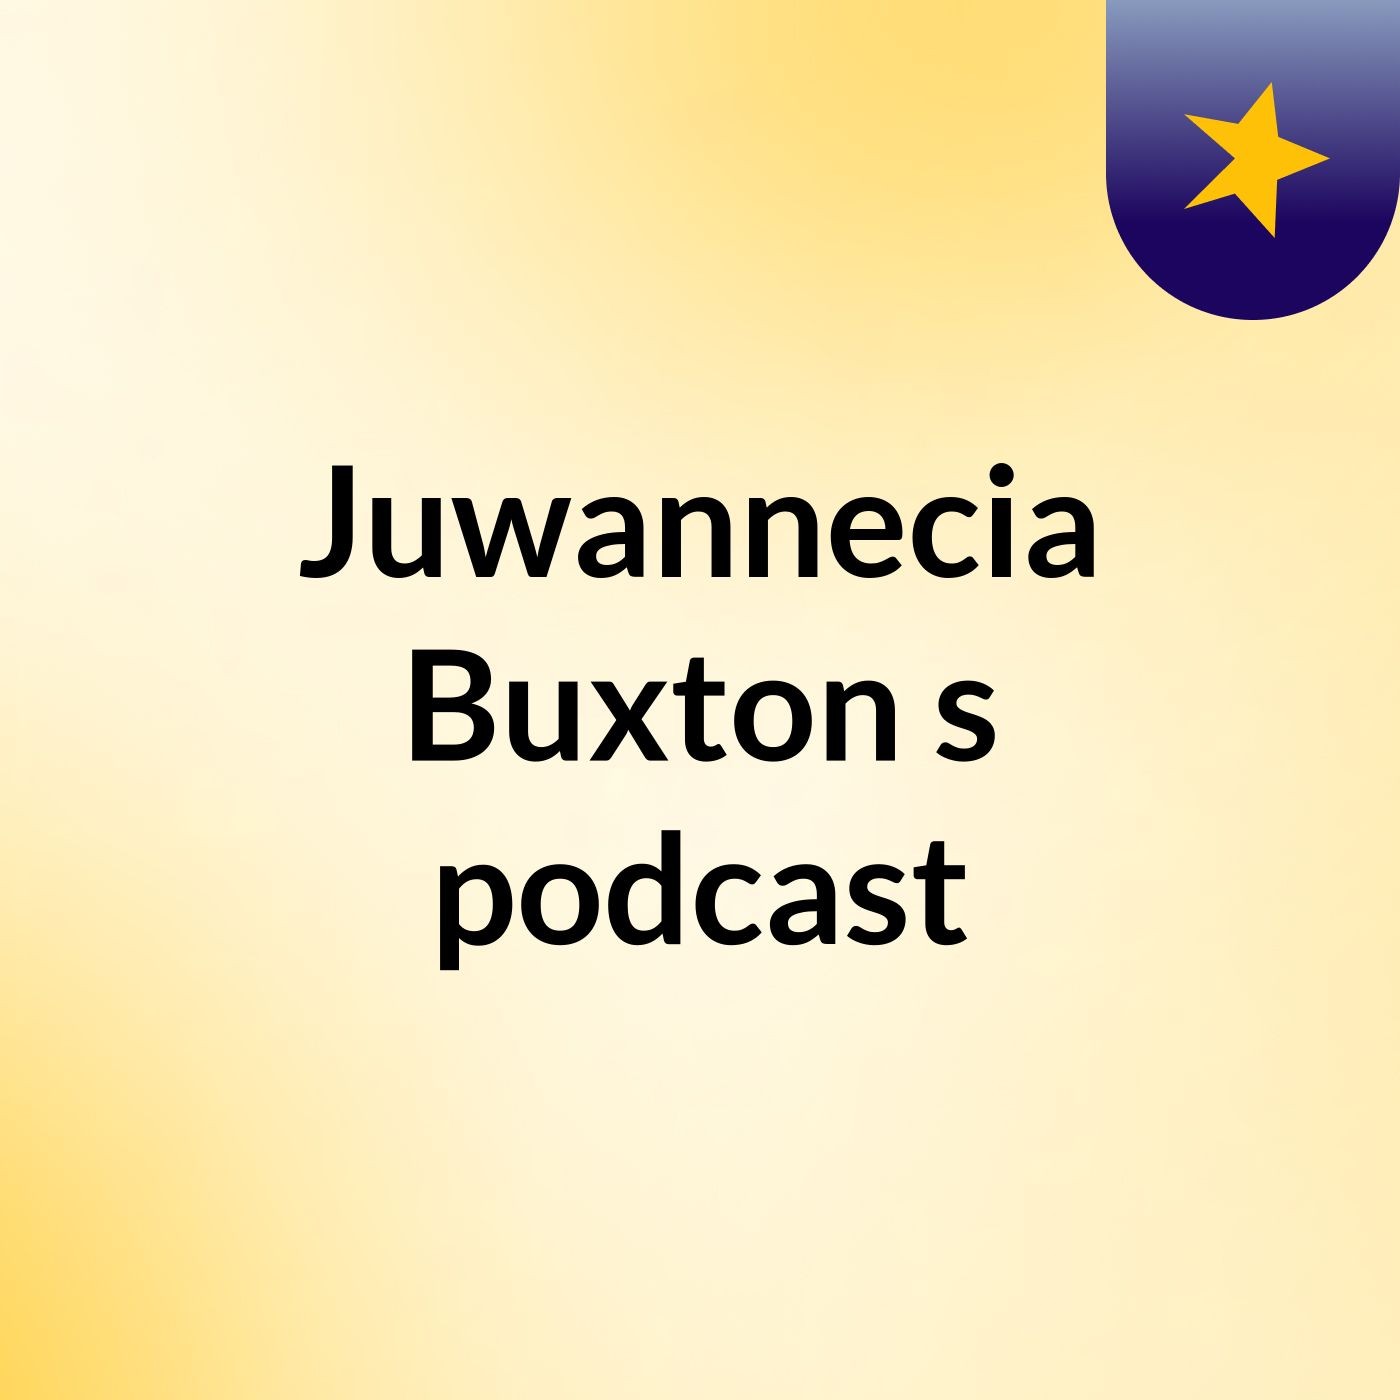 Juwannecia Buxton's podcast